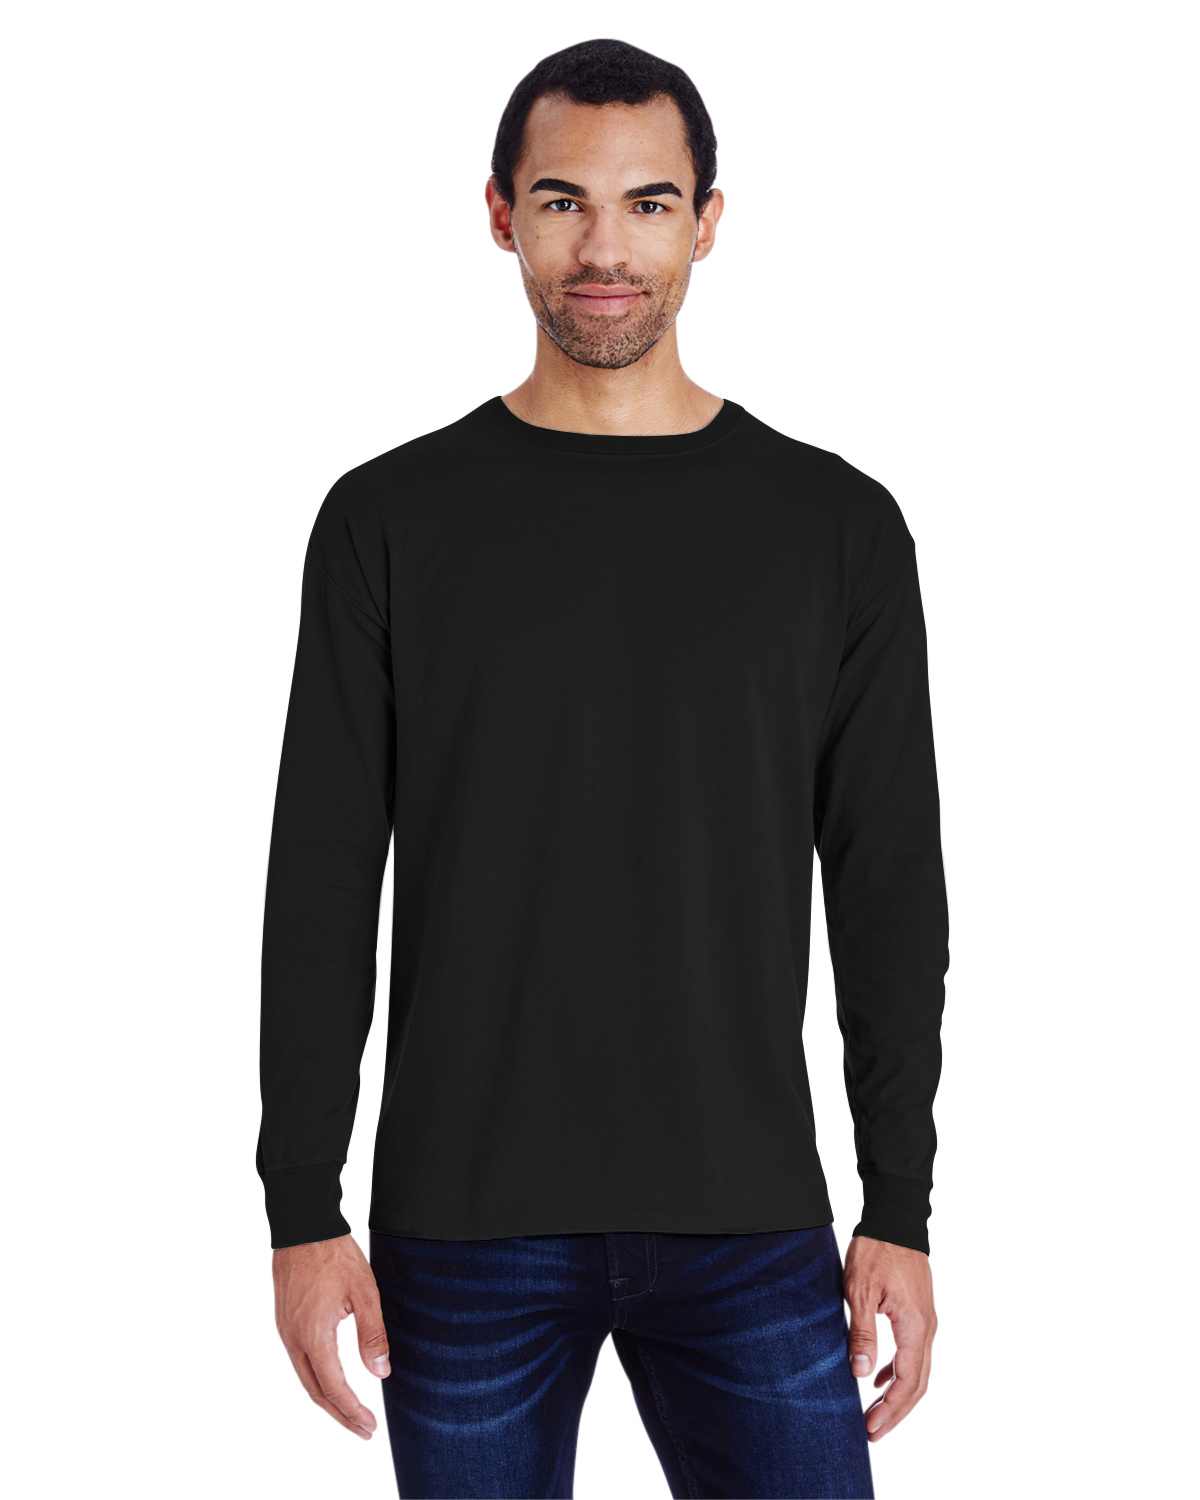 ComfortWash by Hanes GDH200 Garment Dyed Long Sleeve T-Shirt - Black S